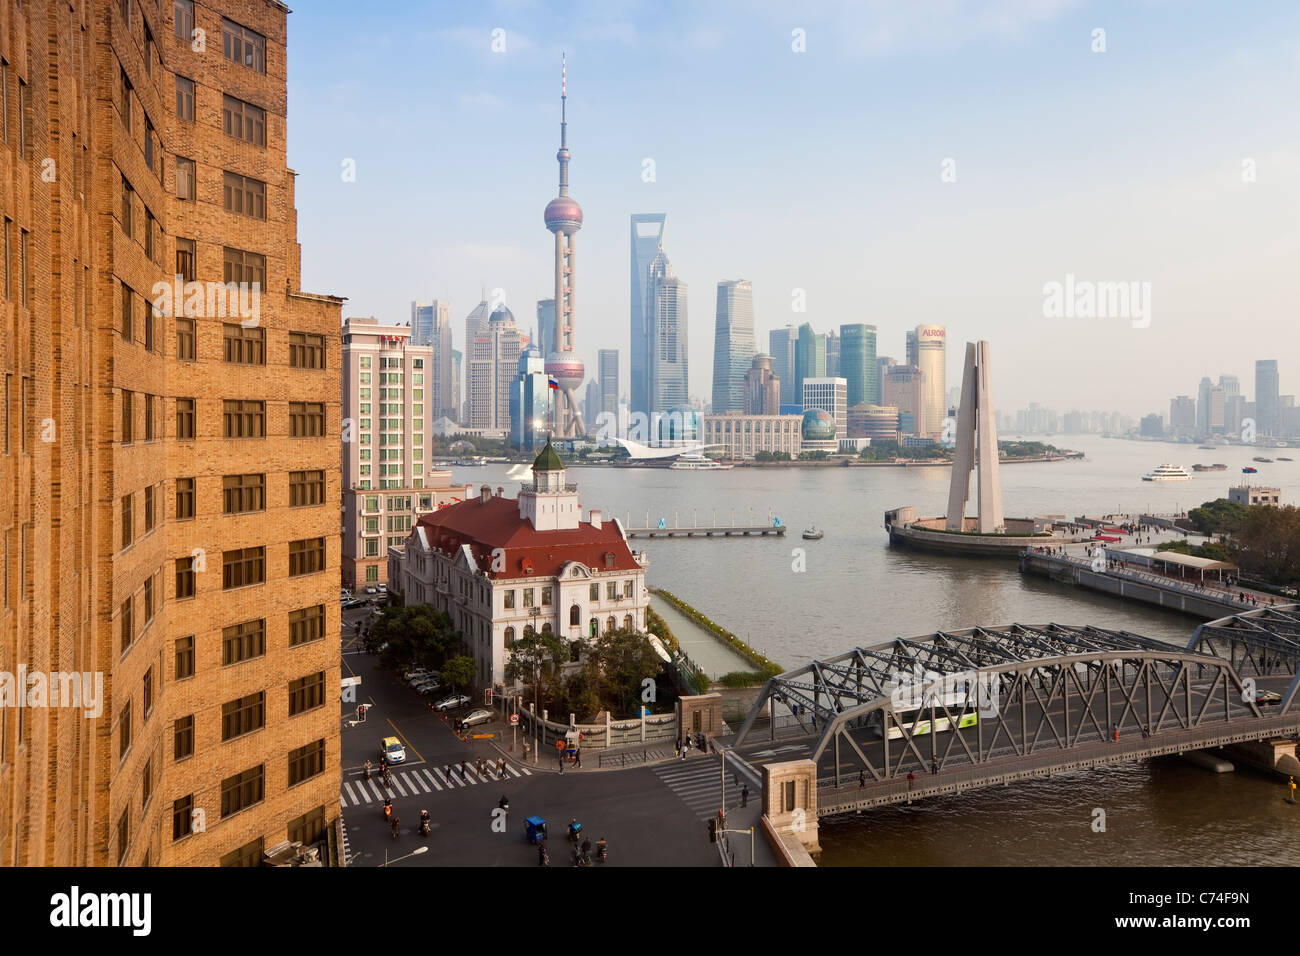 New Pudong skyline Waibaidu (Garden) Bridge looking across the Huangpu River from the Bund Shanghai China Stock Photo